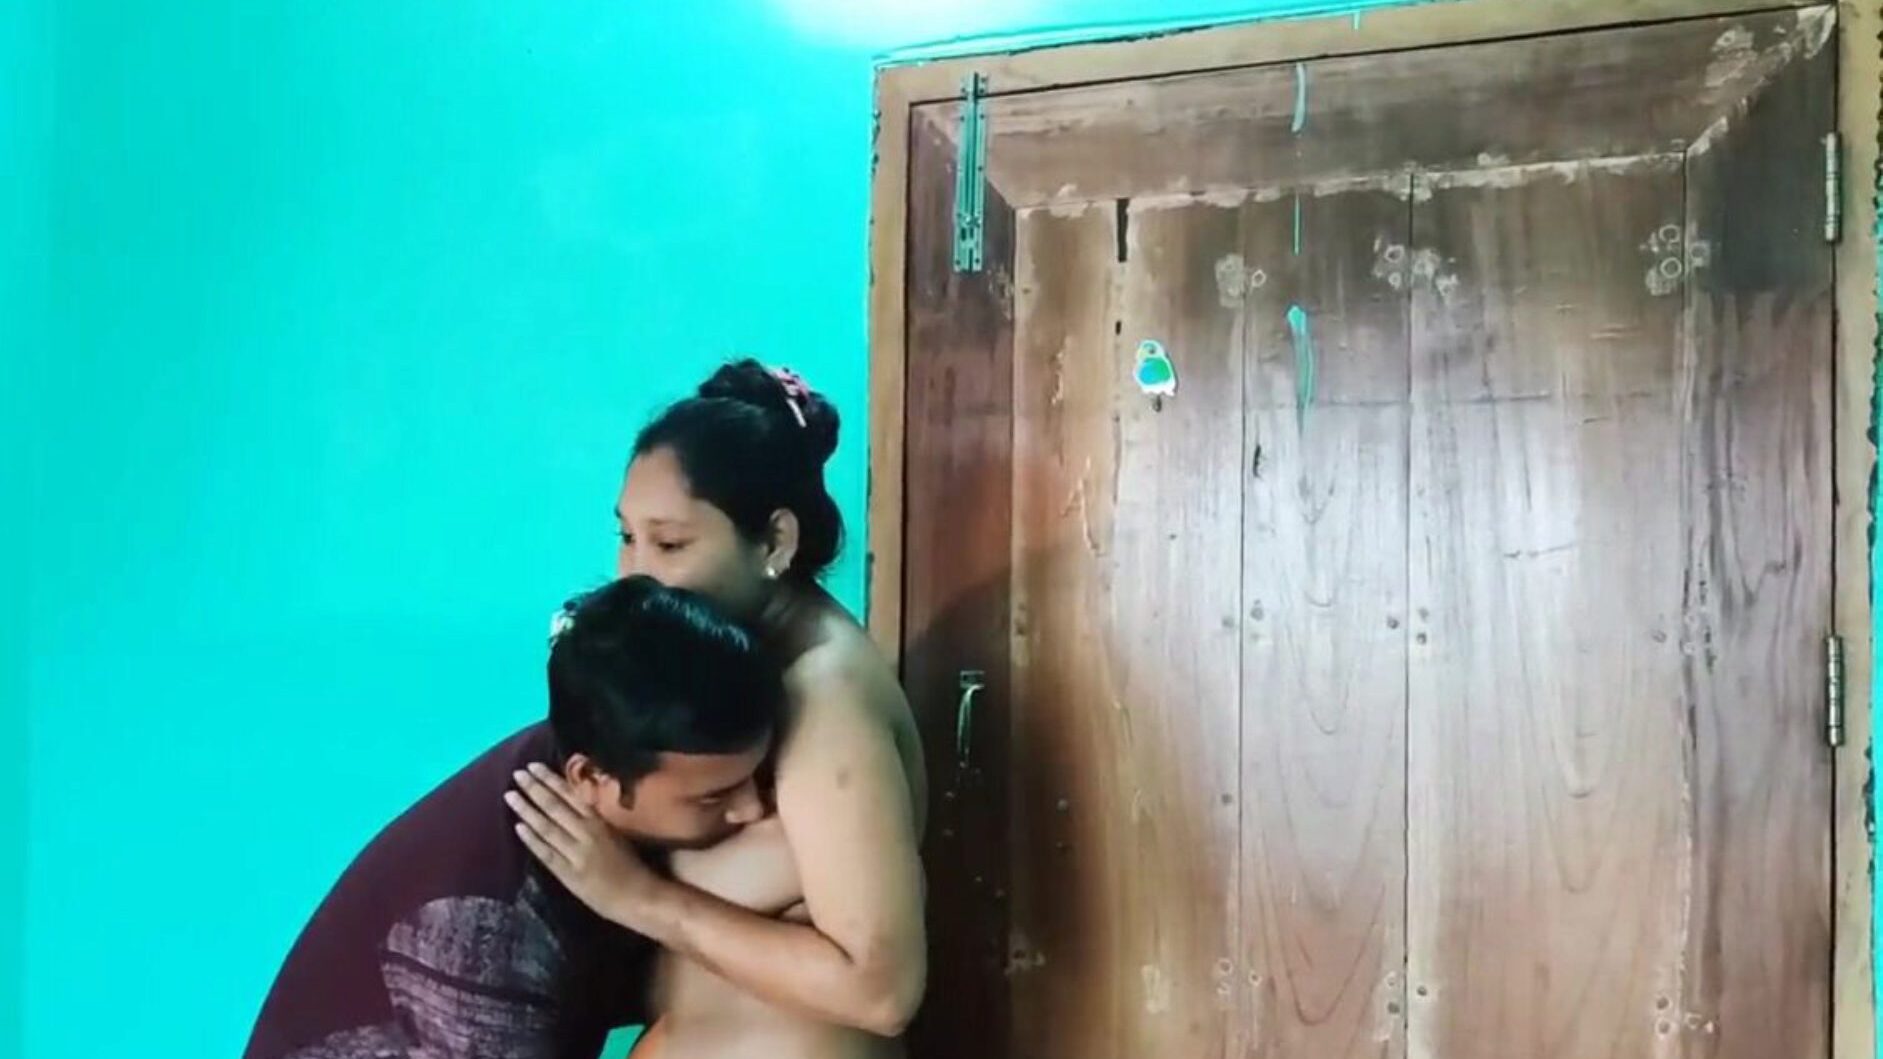 desi bengali sex video gola, besplatna azijska pornografija 6c: xhamster gledaj desi bengali sex video gola epizoda na xhamsteru, najdebljem HD web mjestu s fuck-fest tube s tonama besplatnih azijskih xxn seksualnih i analnih porno filmova